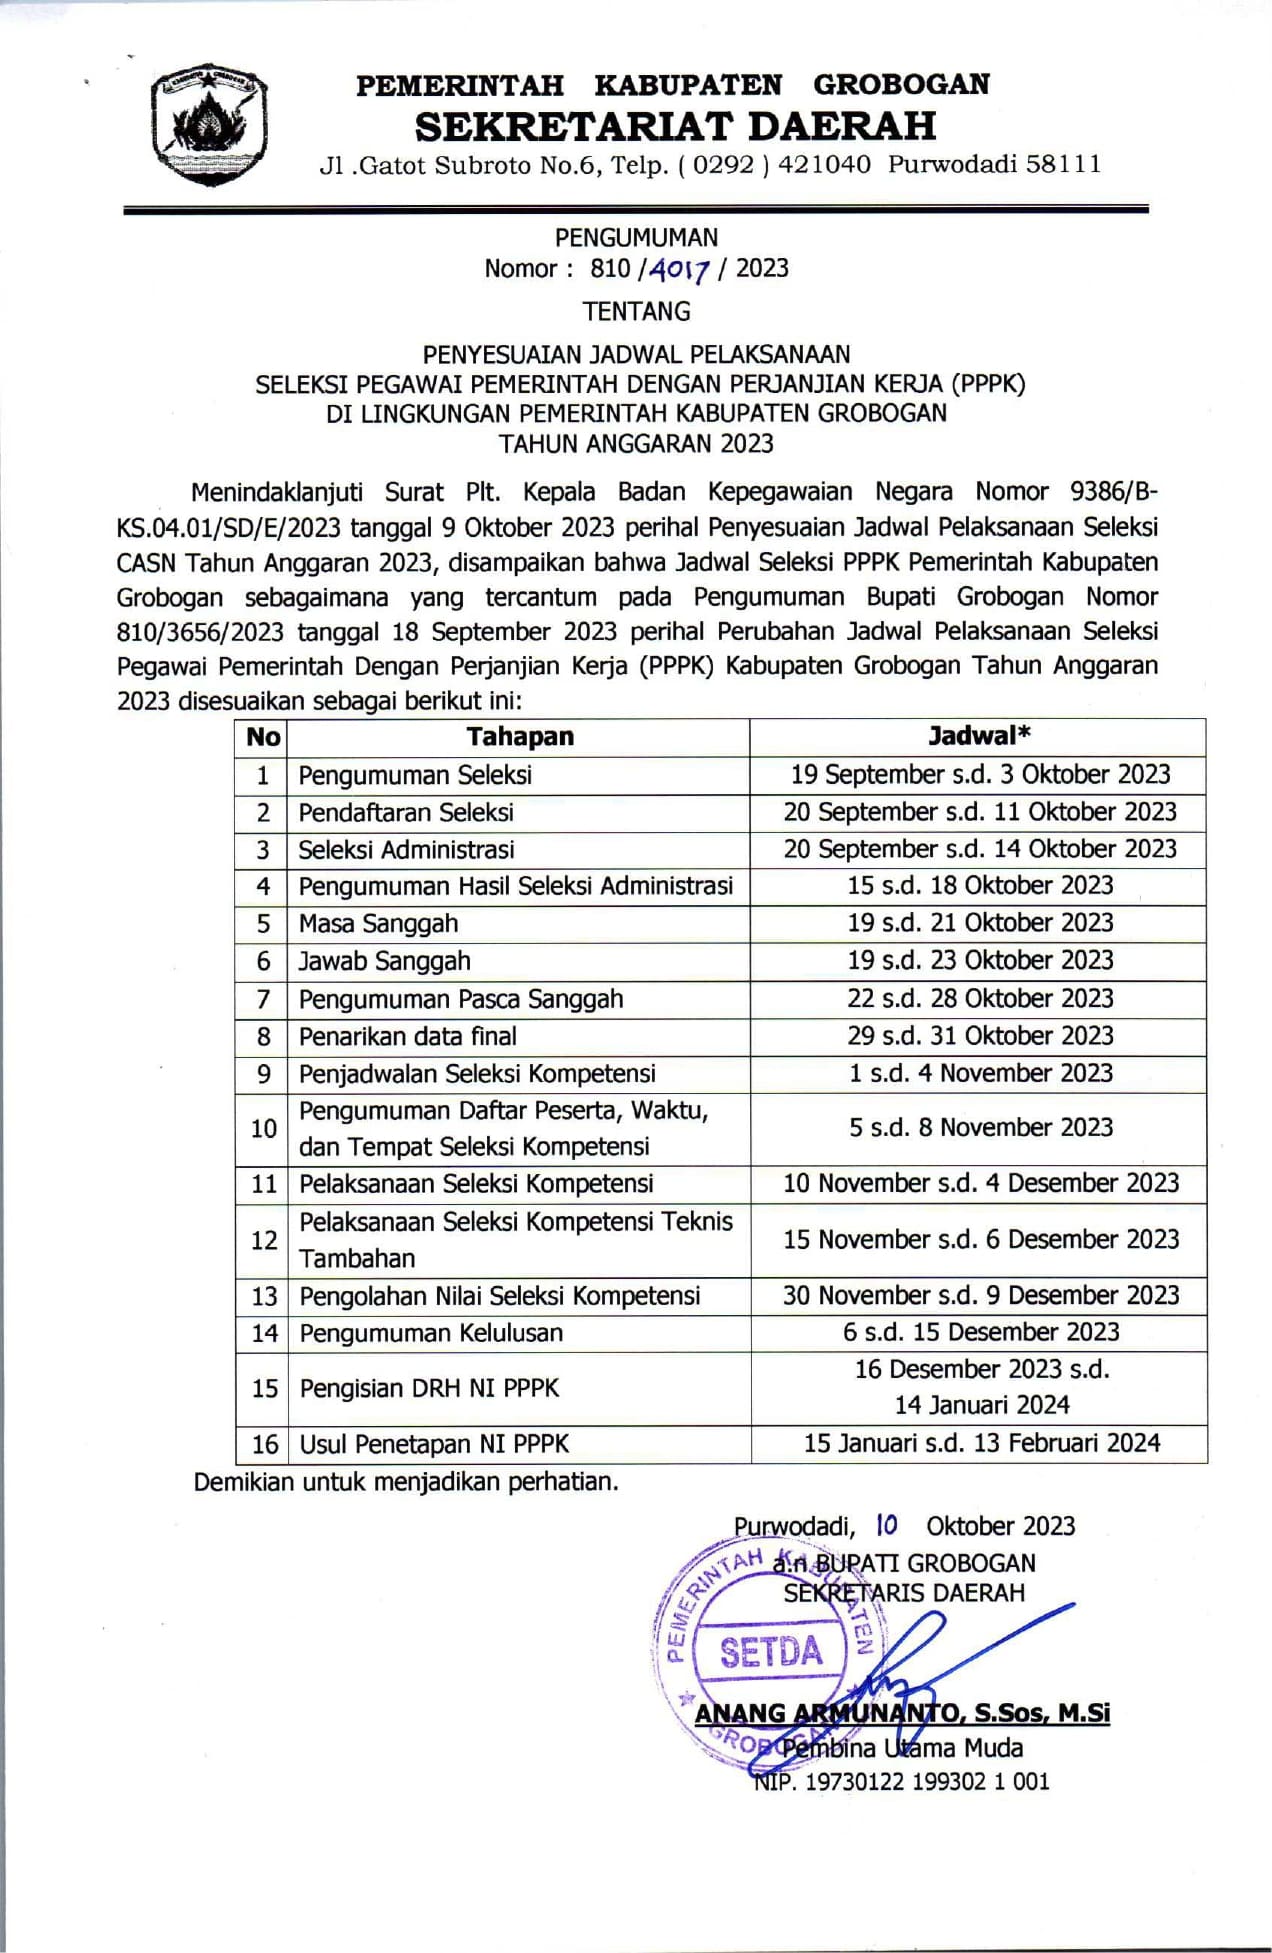 Pengumuman ttg Penyesuaian Jadwal Pelaksanaan Seleksi PPPK Pemkab. Grobogan T.A 2023 page 0001 min